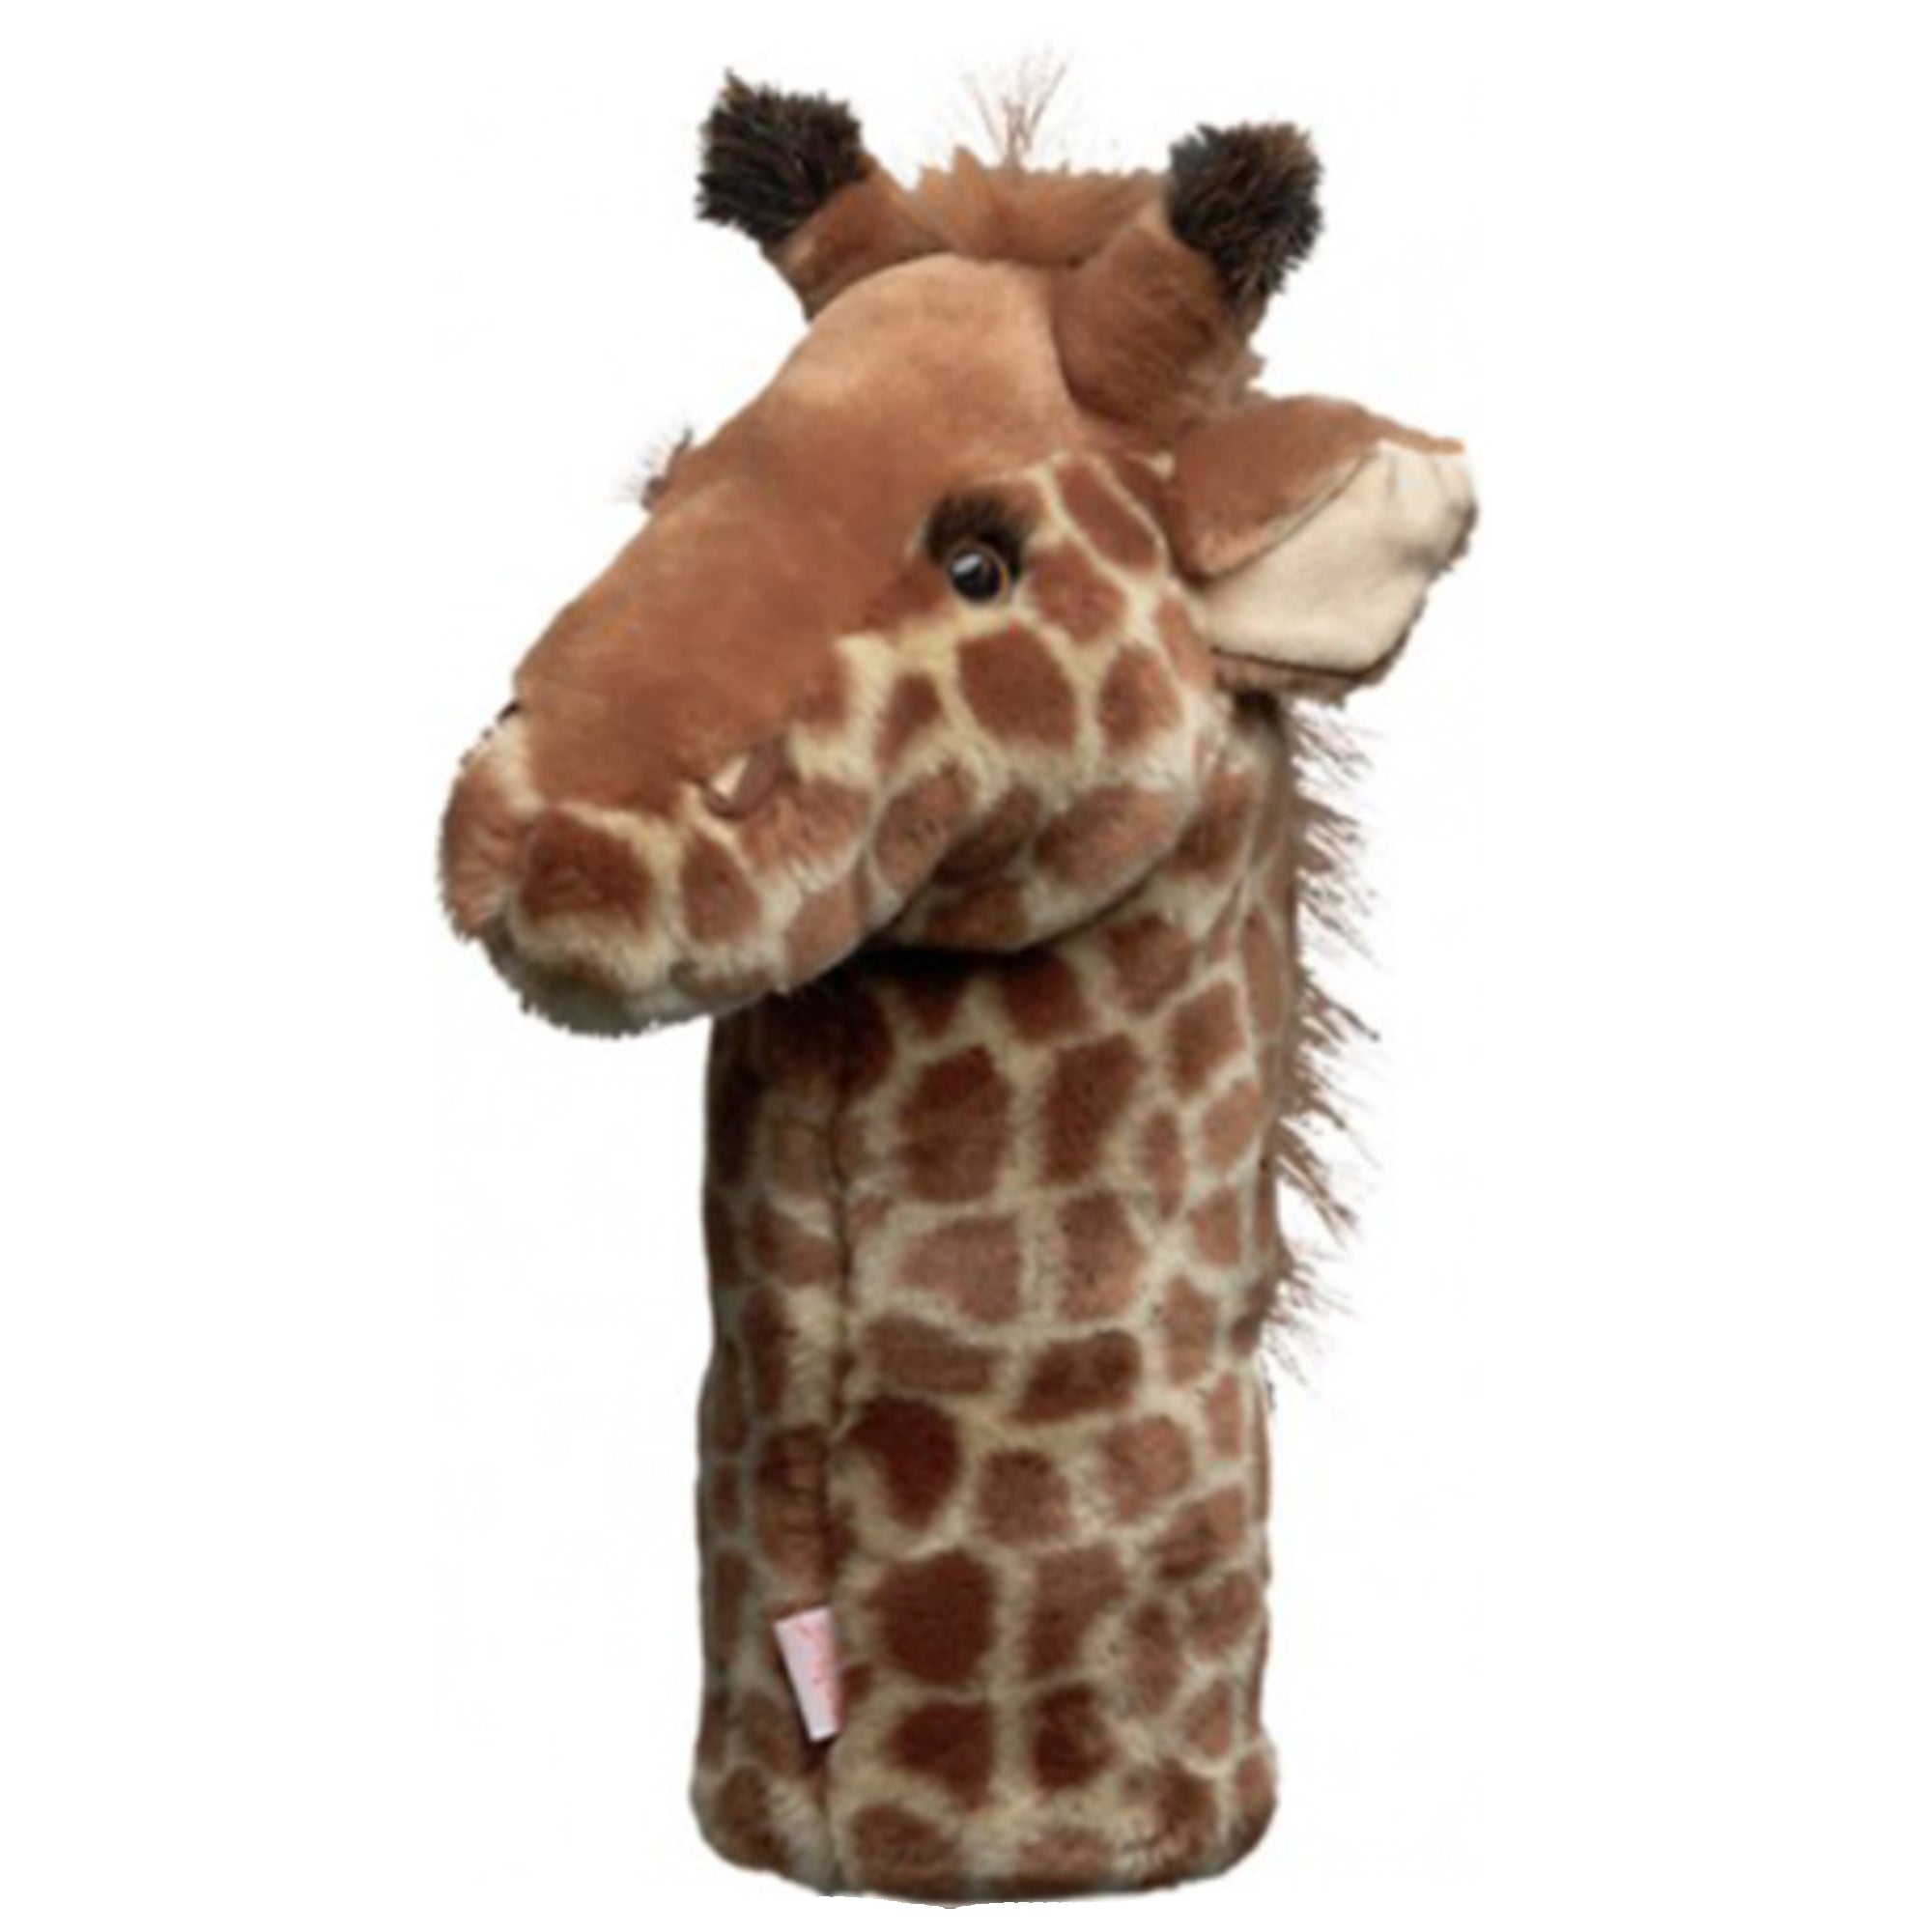 Daphne's Giraffe Headcover